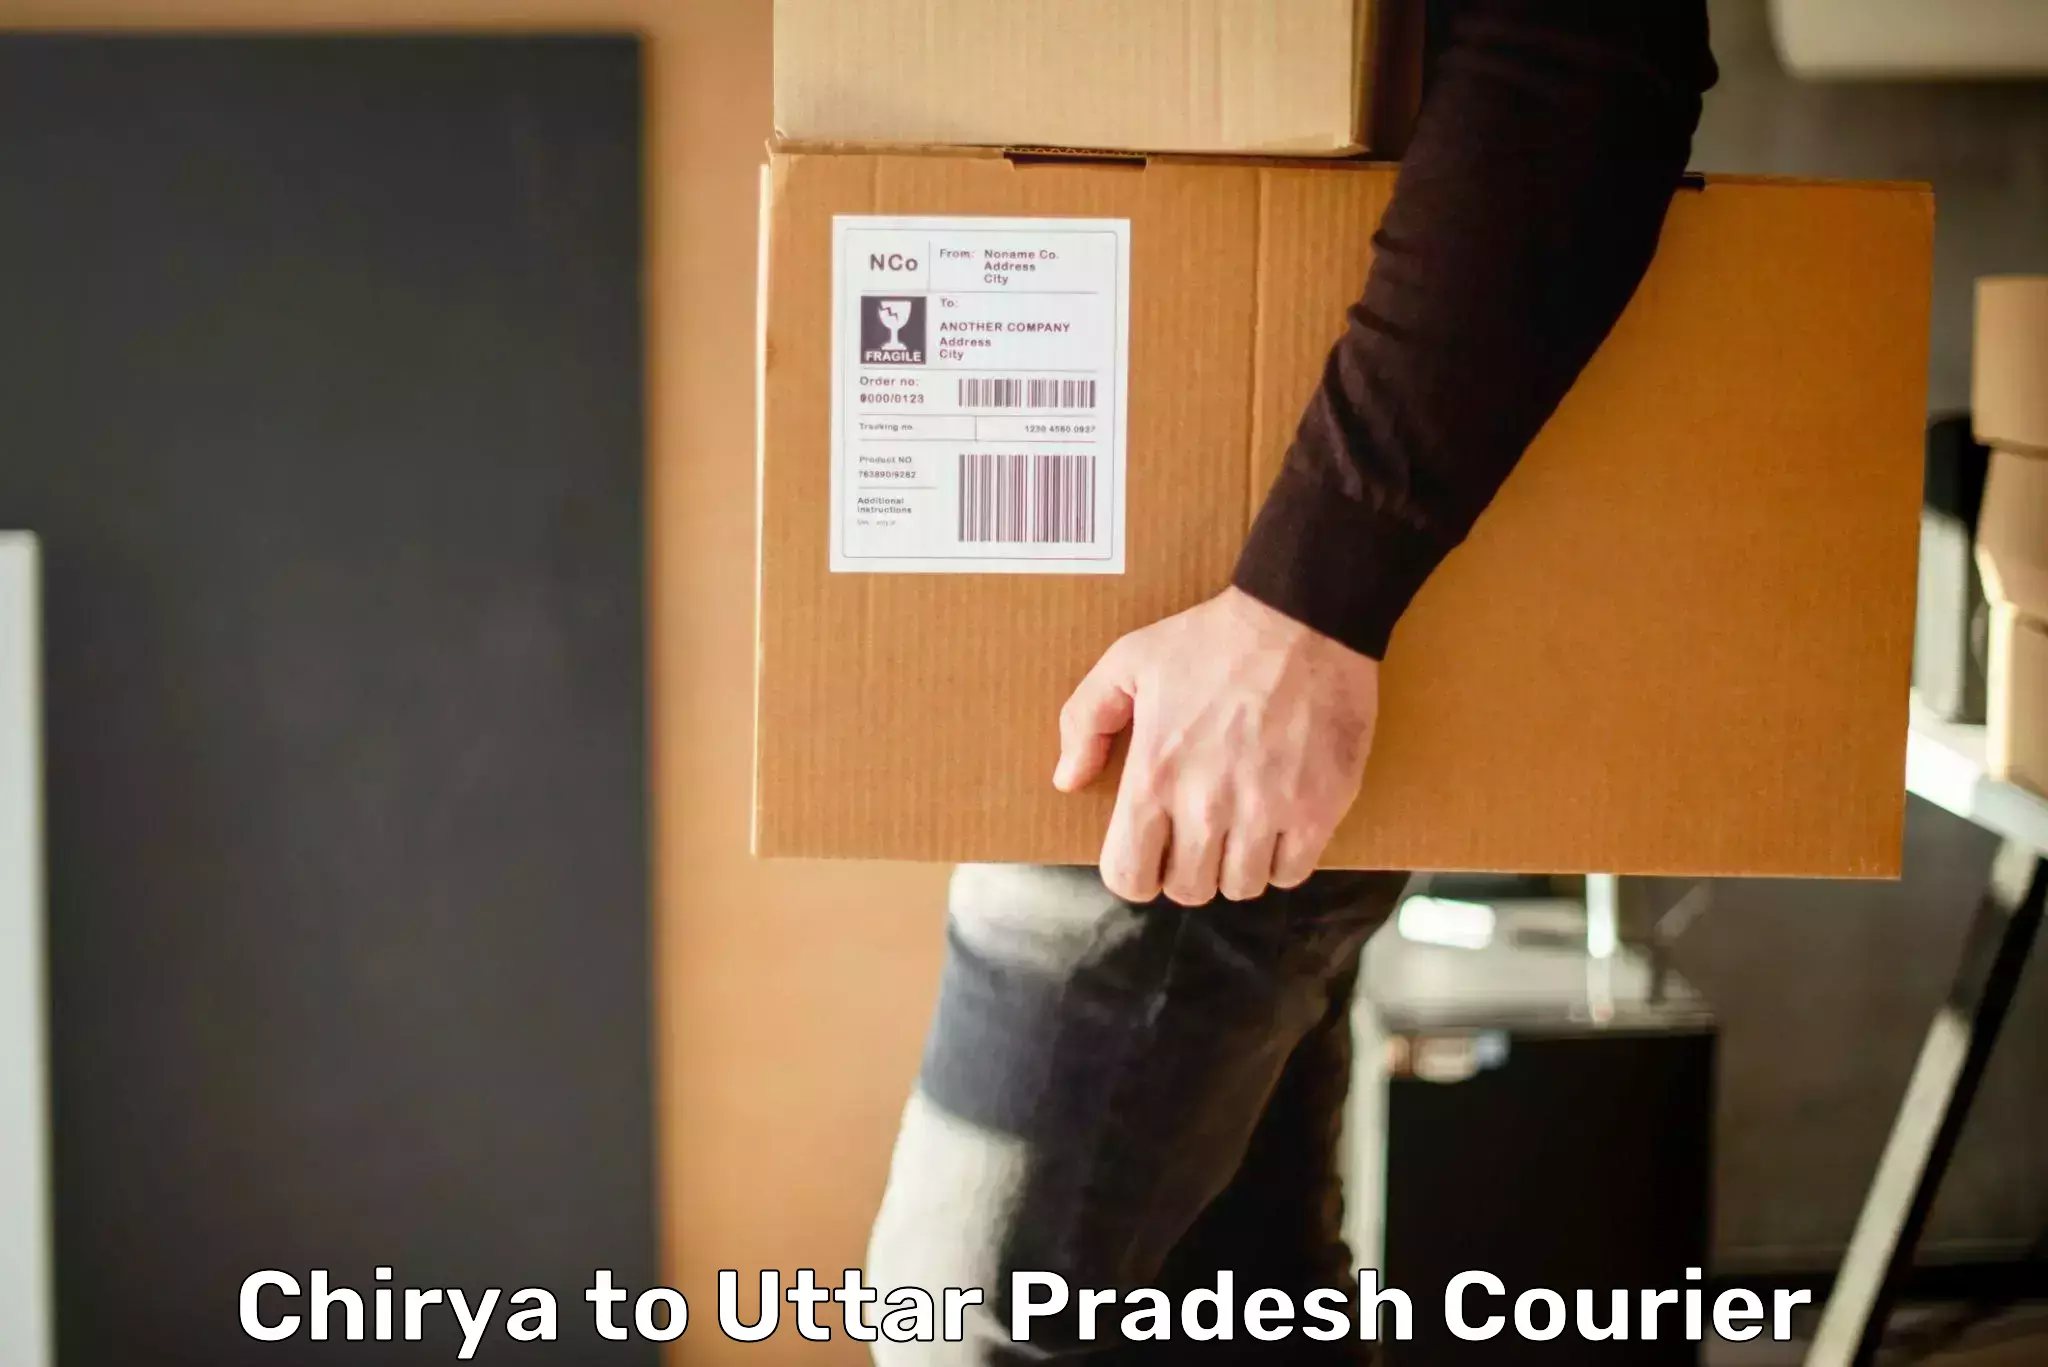 High-performance logistics Chirya to Uttar Pradesh